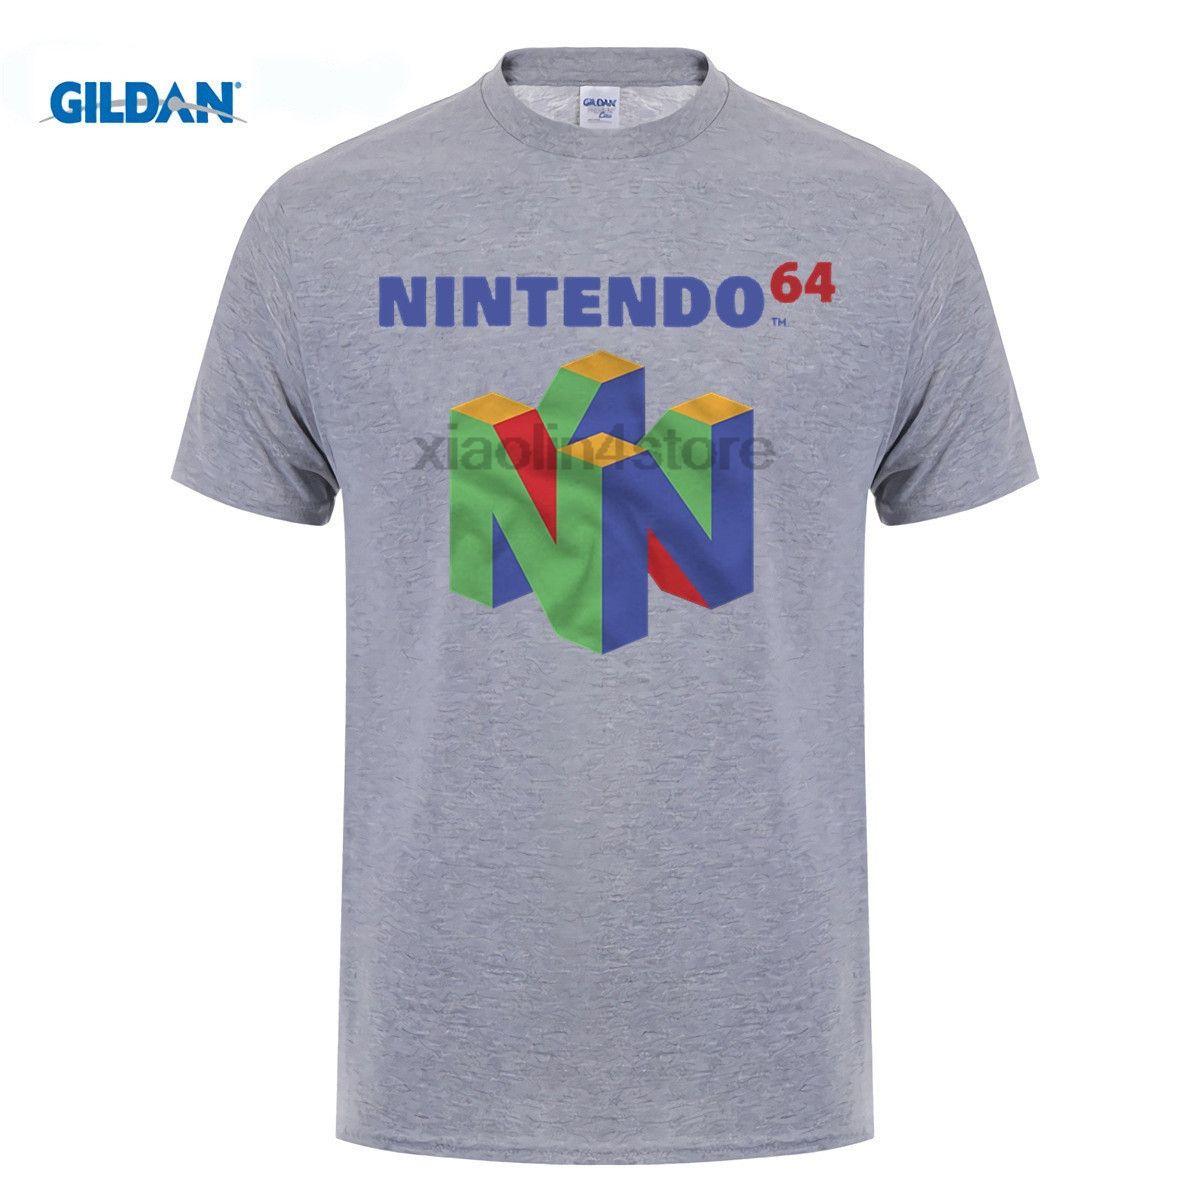 An L Clothing and Apparel Logo - GILDAN N64 Logo Apparel T Shirt L Black Casual Plus Size T Shirts